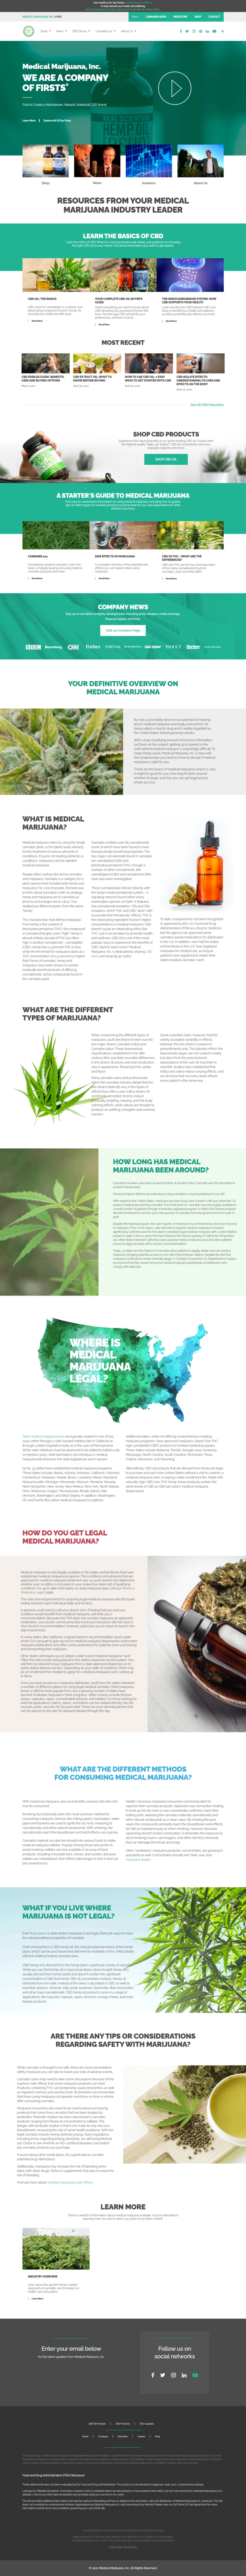 - Medical Marijuana Inc - Cannabis Knowledge Expert & Industry Leader_ - www.medicalmarijuanainc.com.png